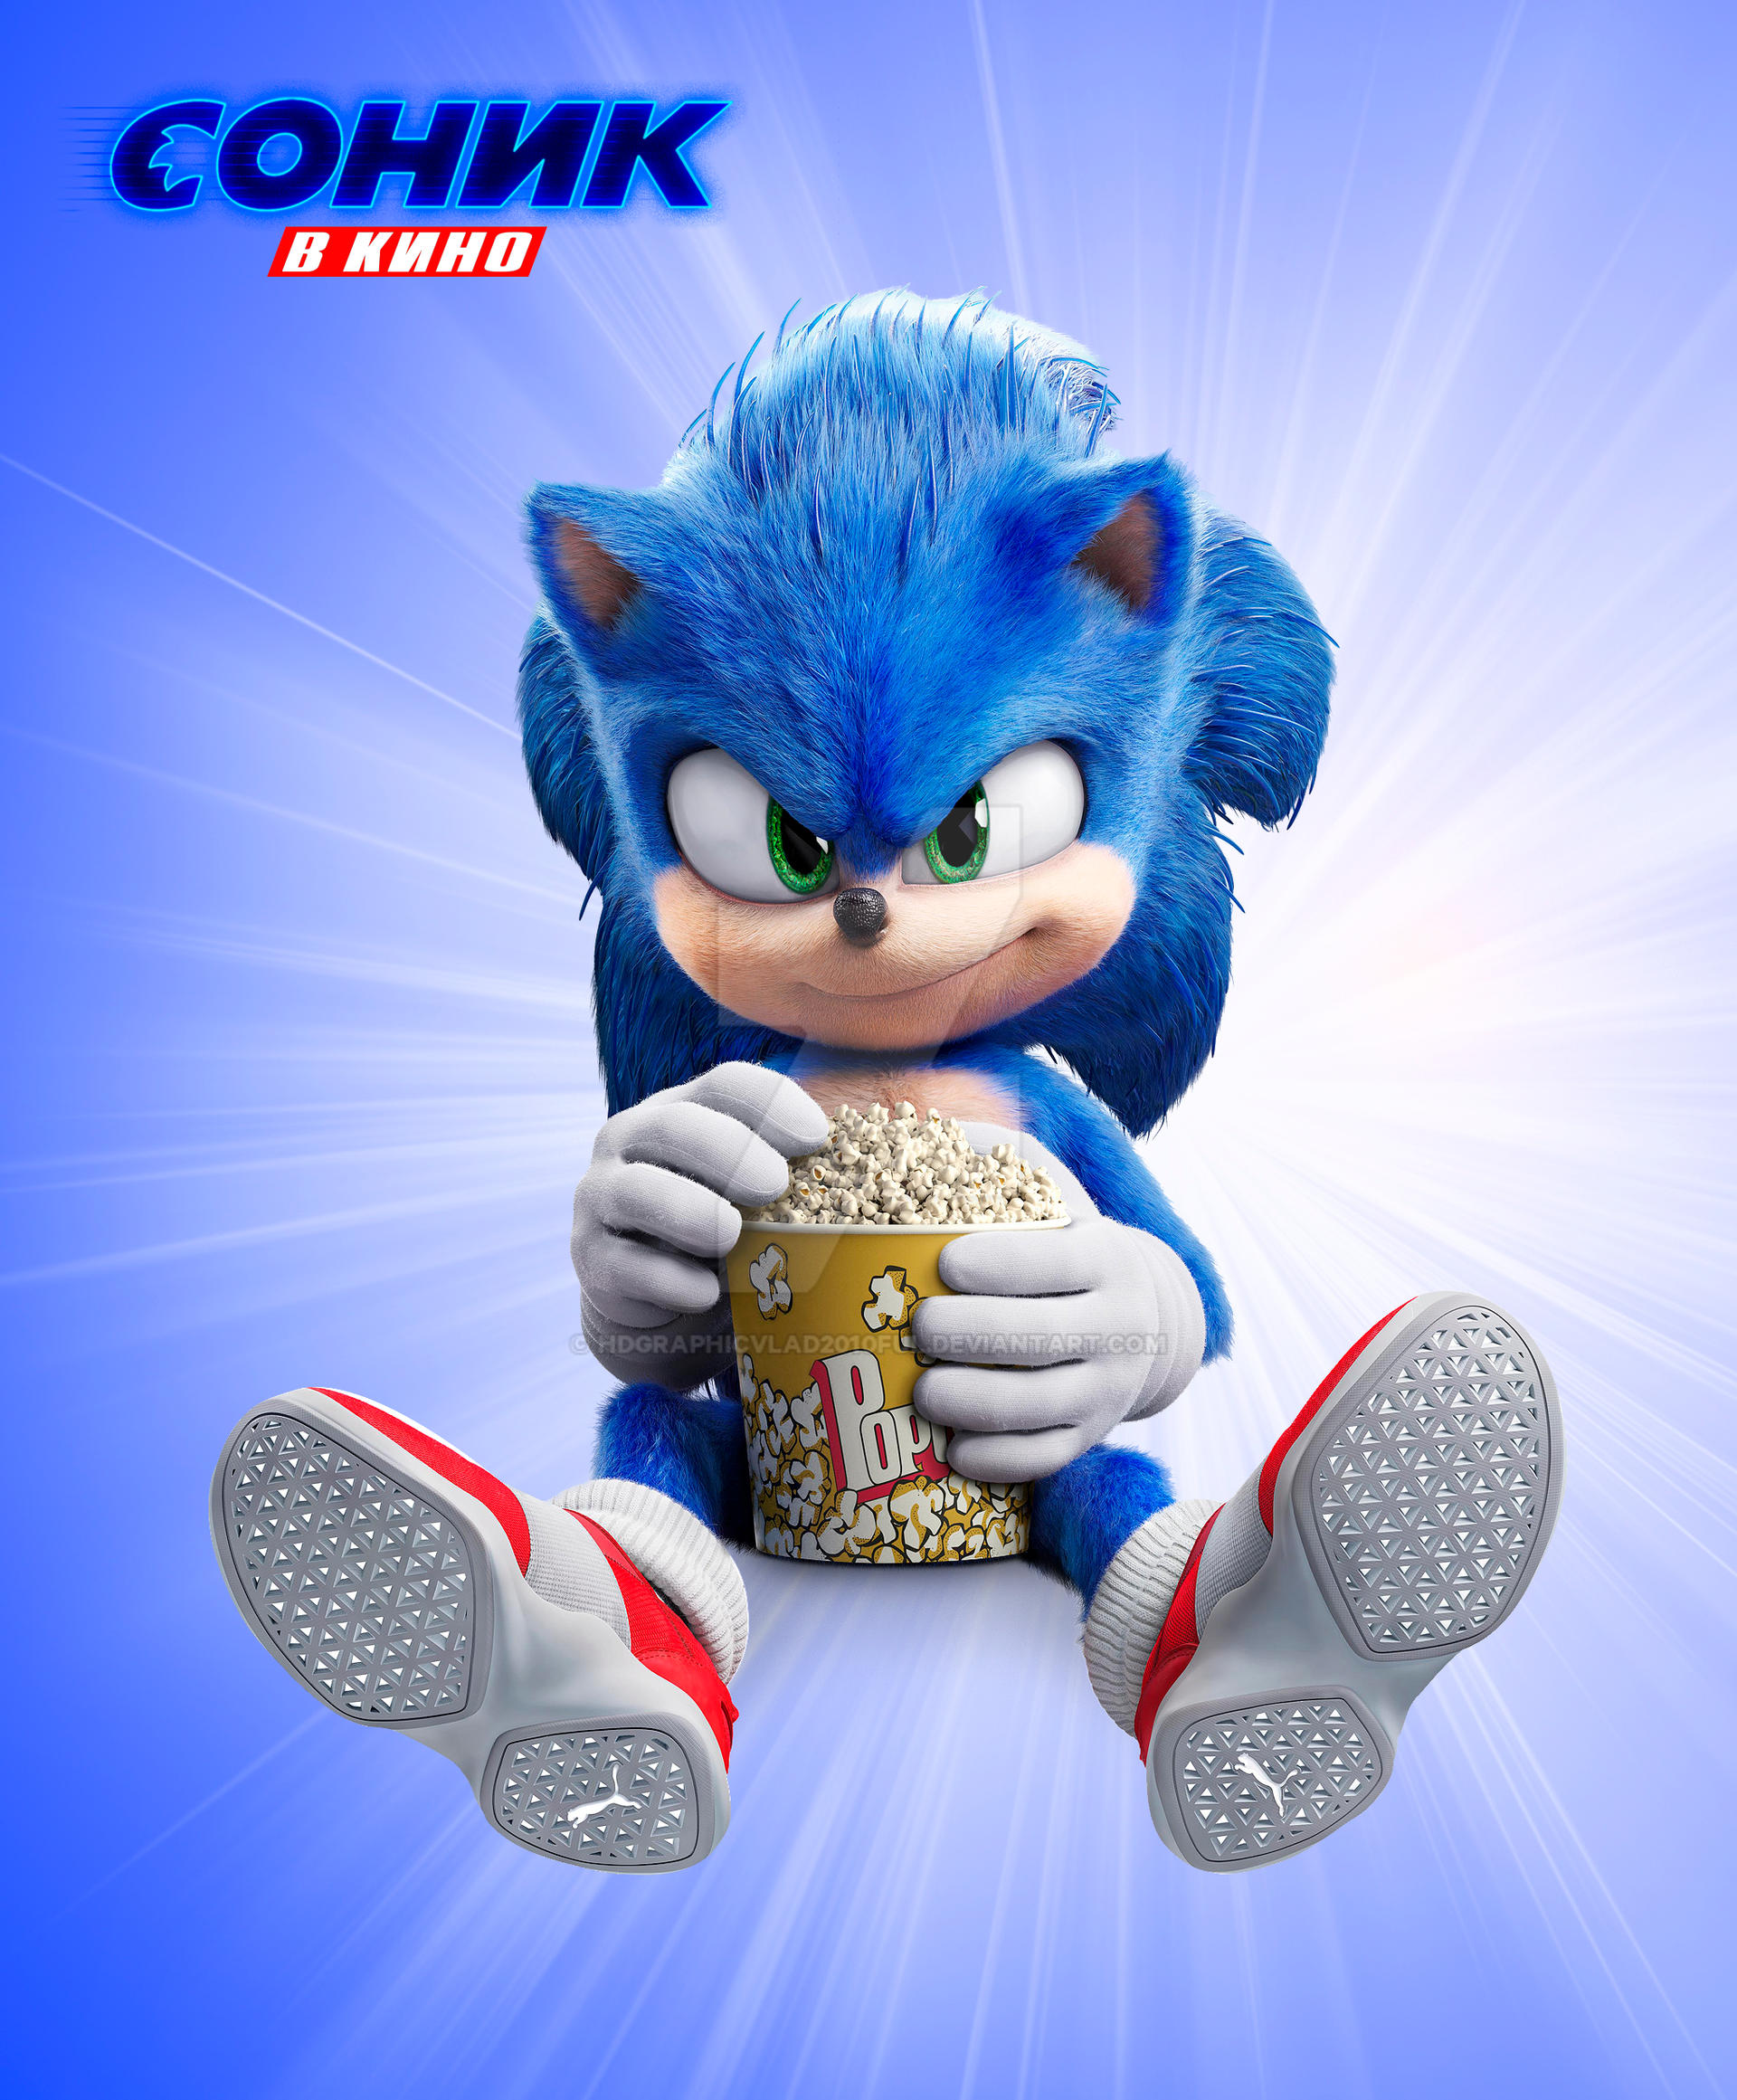 Sonic the Hedgehog (2018) Movie Poster by SpongeBobfan2010 on DeviantArt